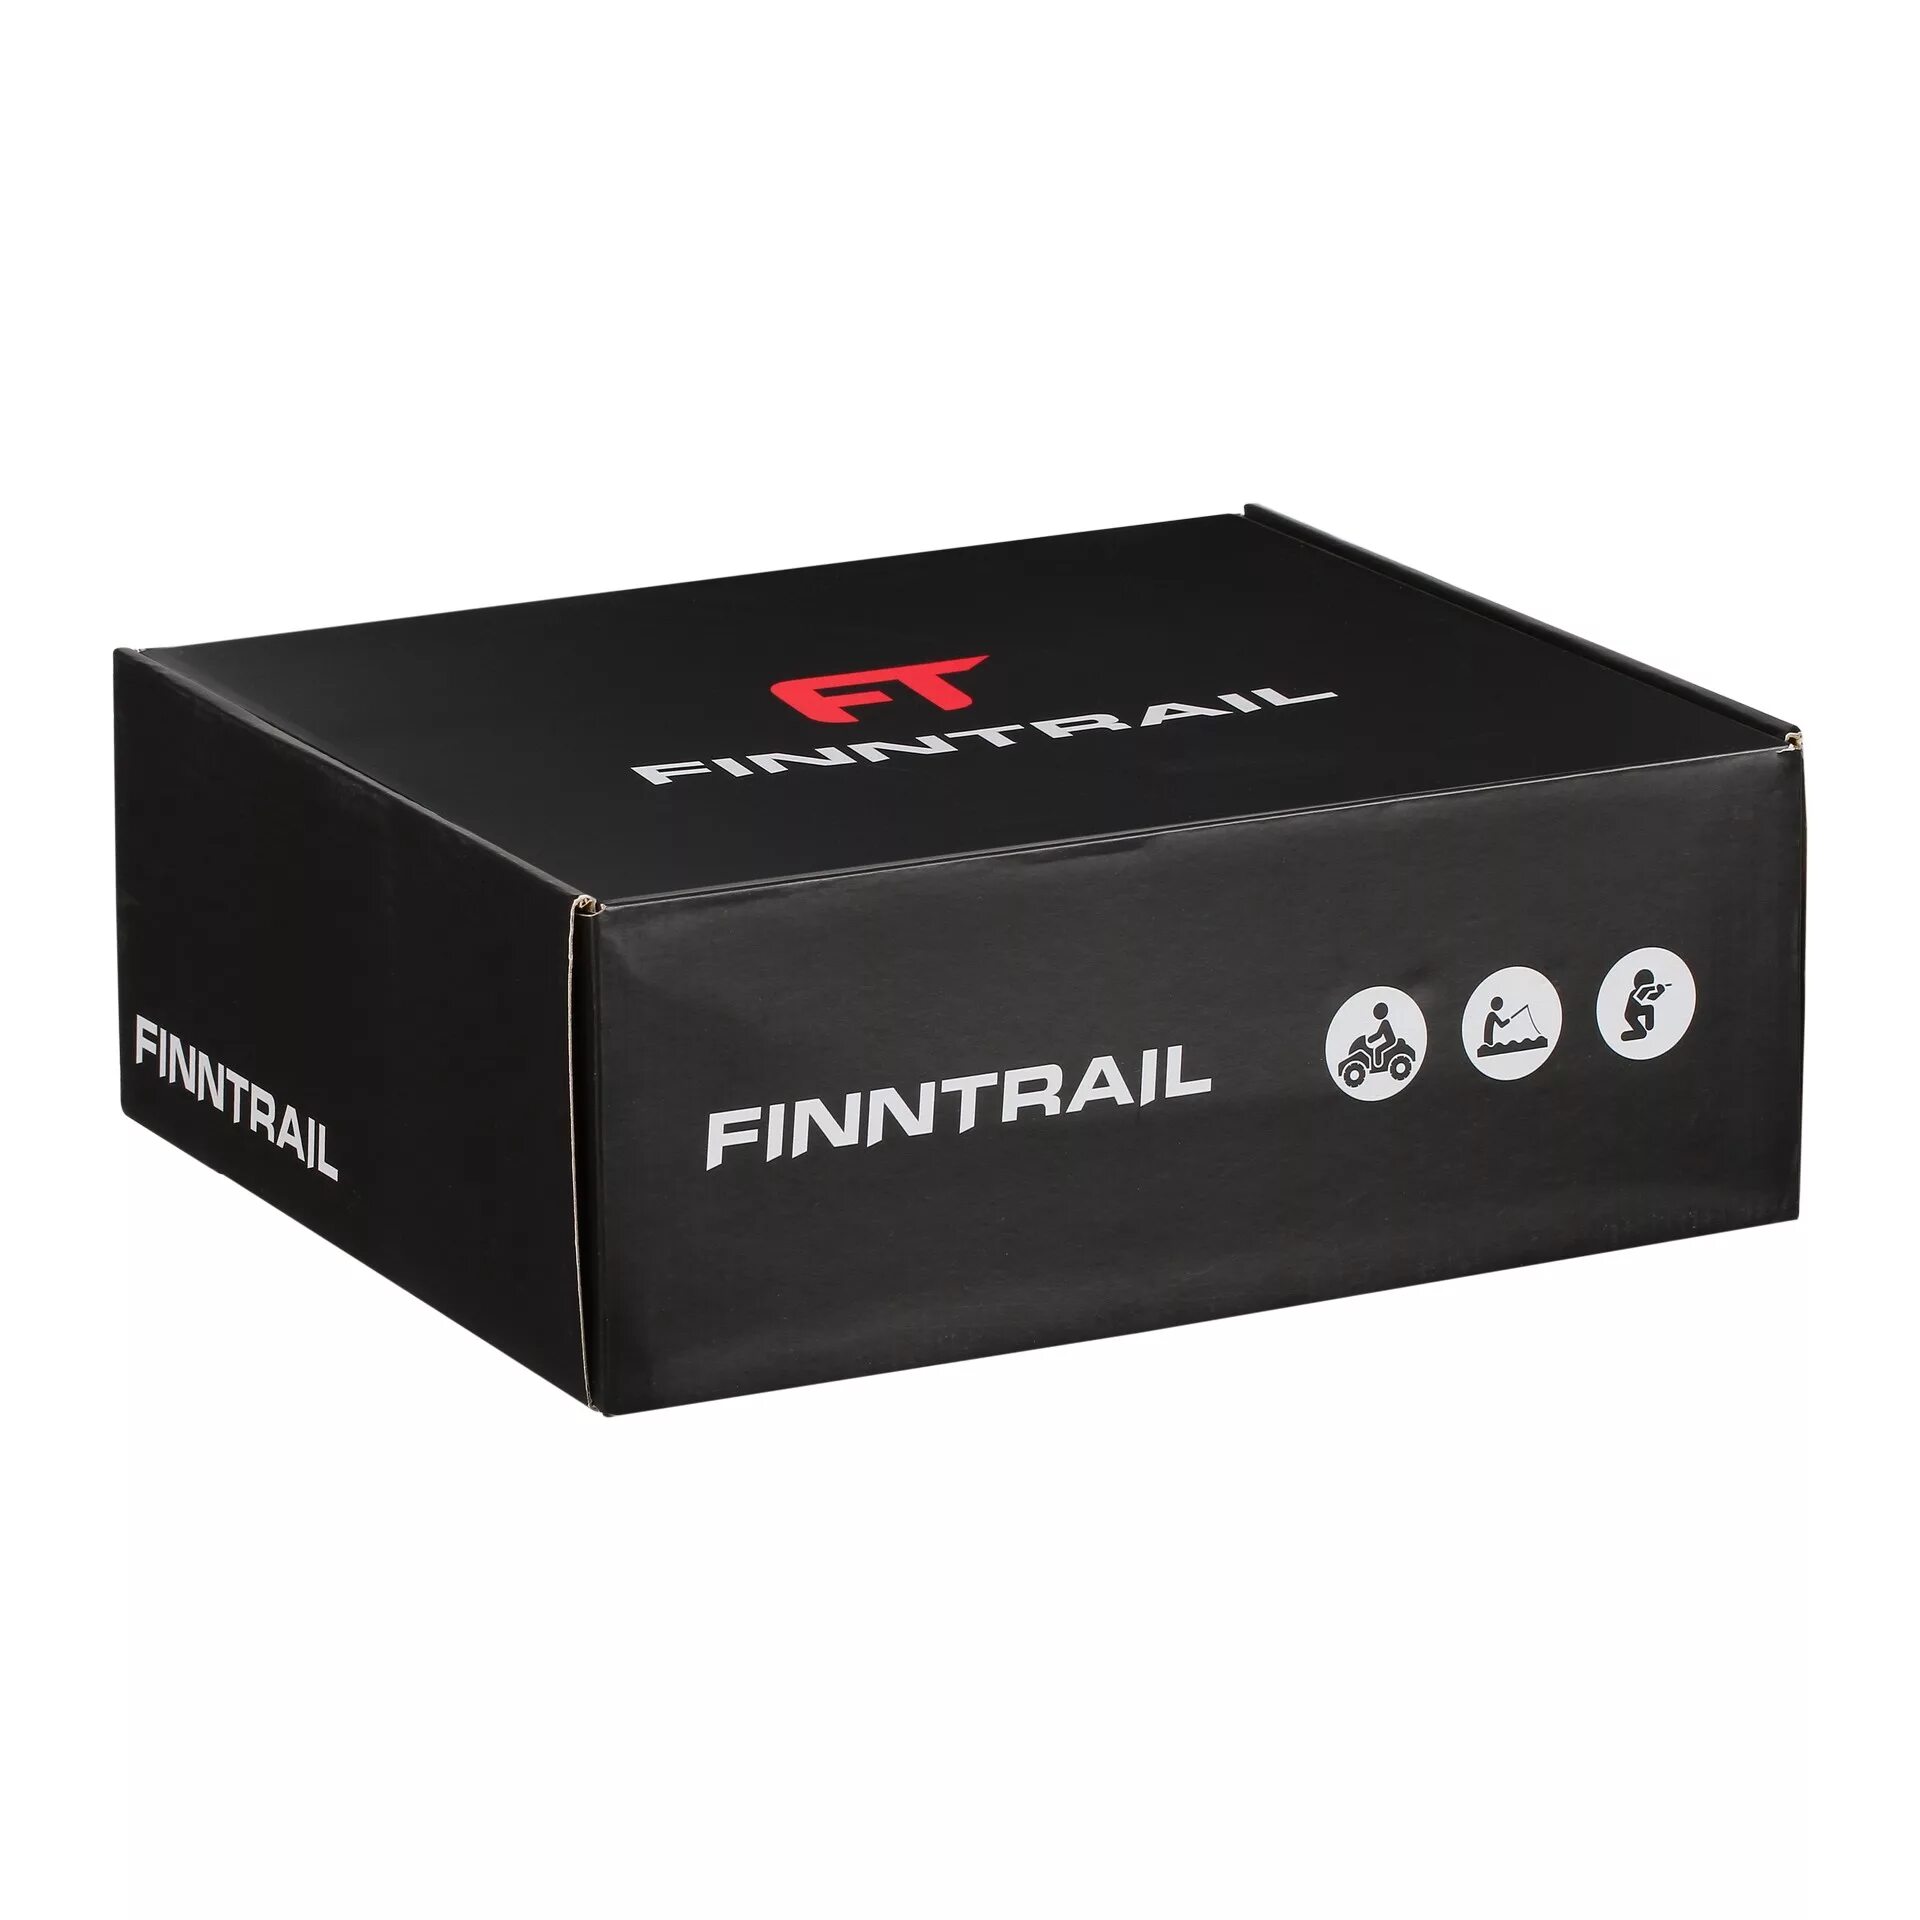 Fintreil. Забродные ботинки Finntrail. Ботинки Finntrail Speedmaster 5200_n. Finntrail Speedmaster. Забродный комплект Finntrail.